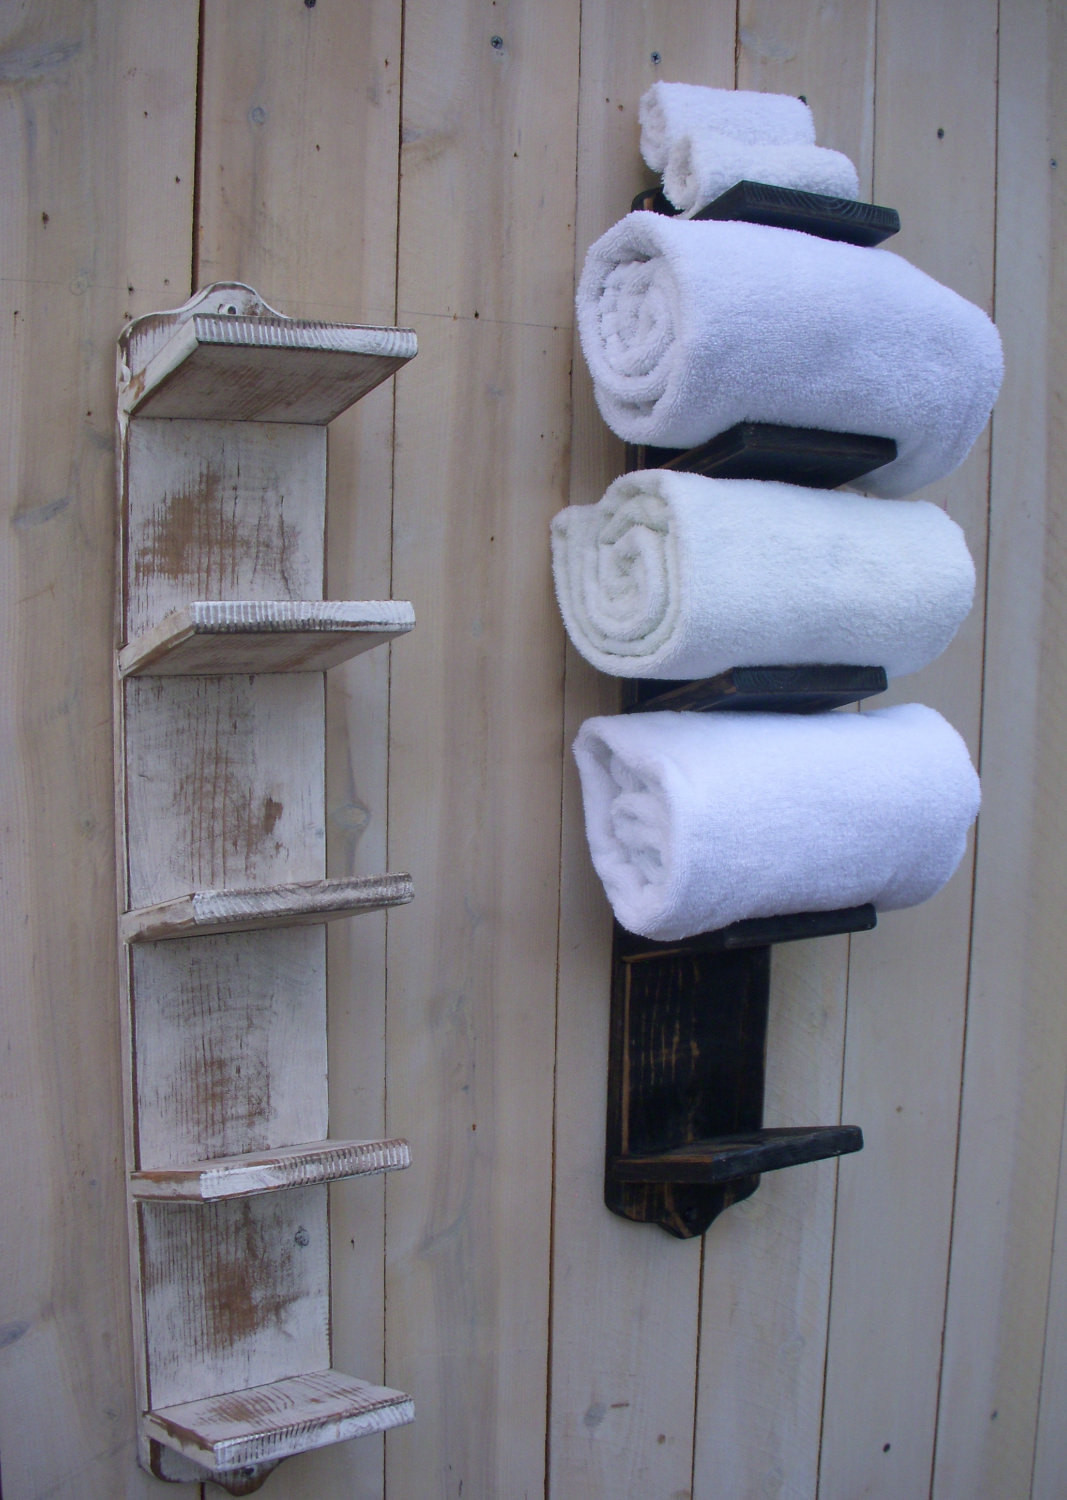 Best ideas about DIY Towel Storage
. Save or Pin Handmade Bathroom Towel Holder Rack Bath Decor Wood Now.